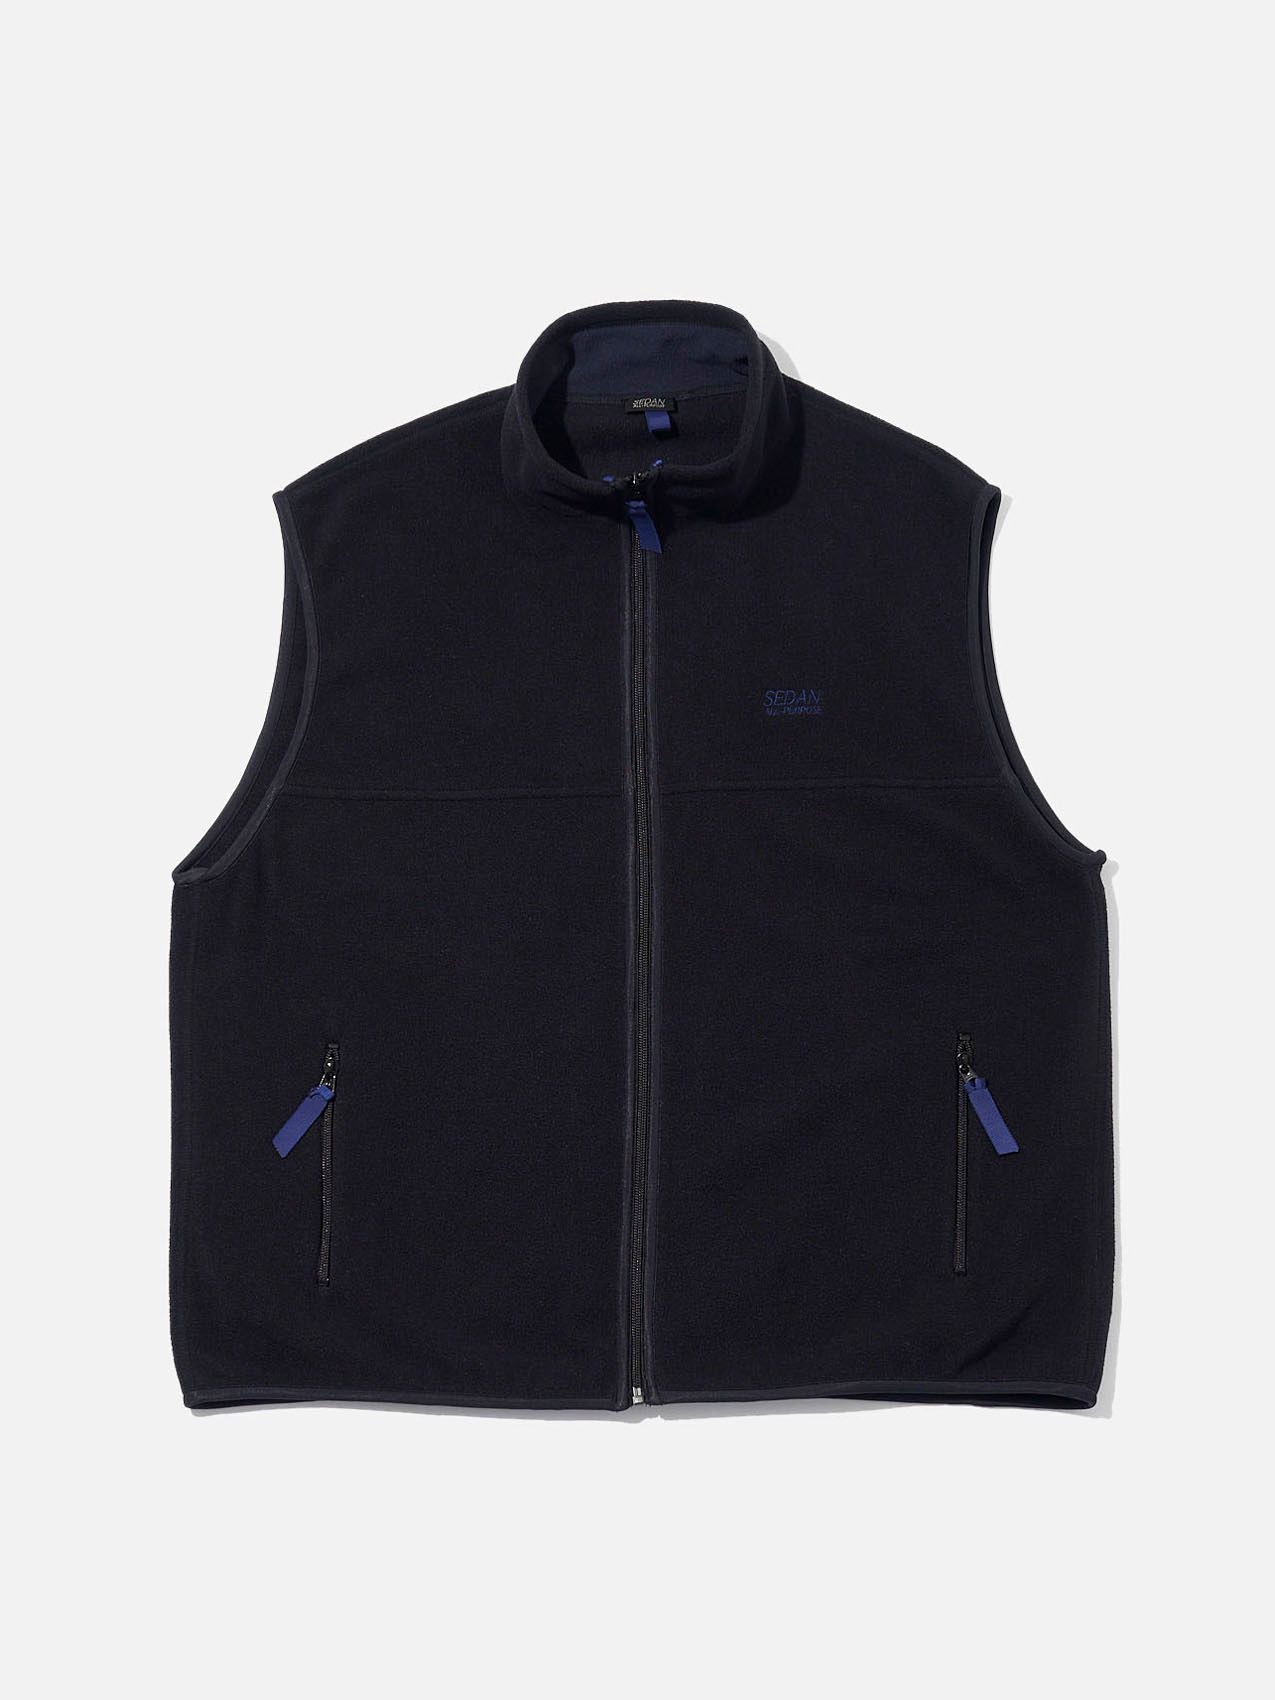 SEDAN ALL-PURPOSE - セダンオールパーパスFW23 Fleece Full Zip Vest ...